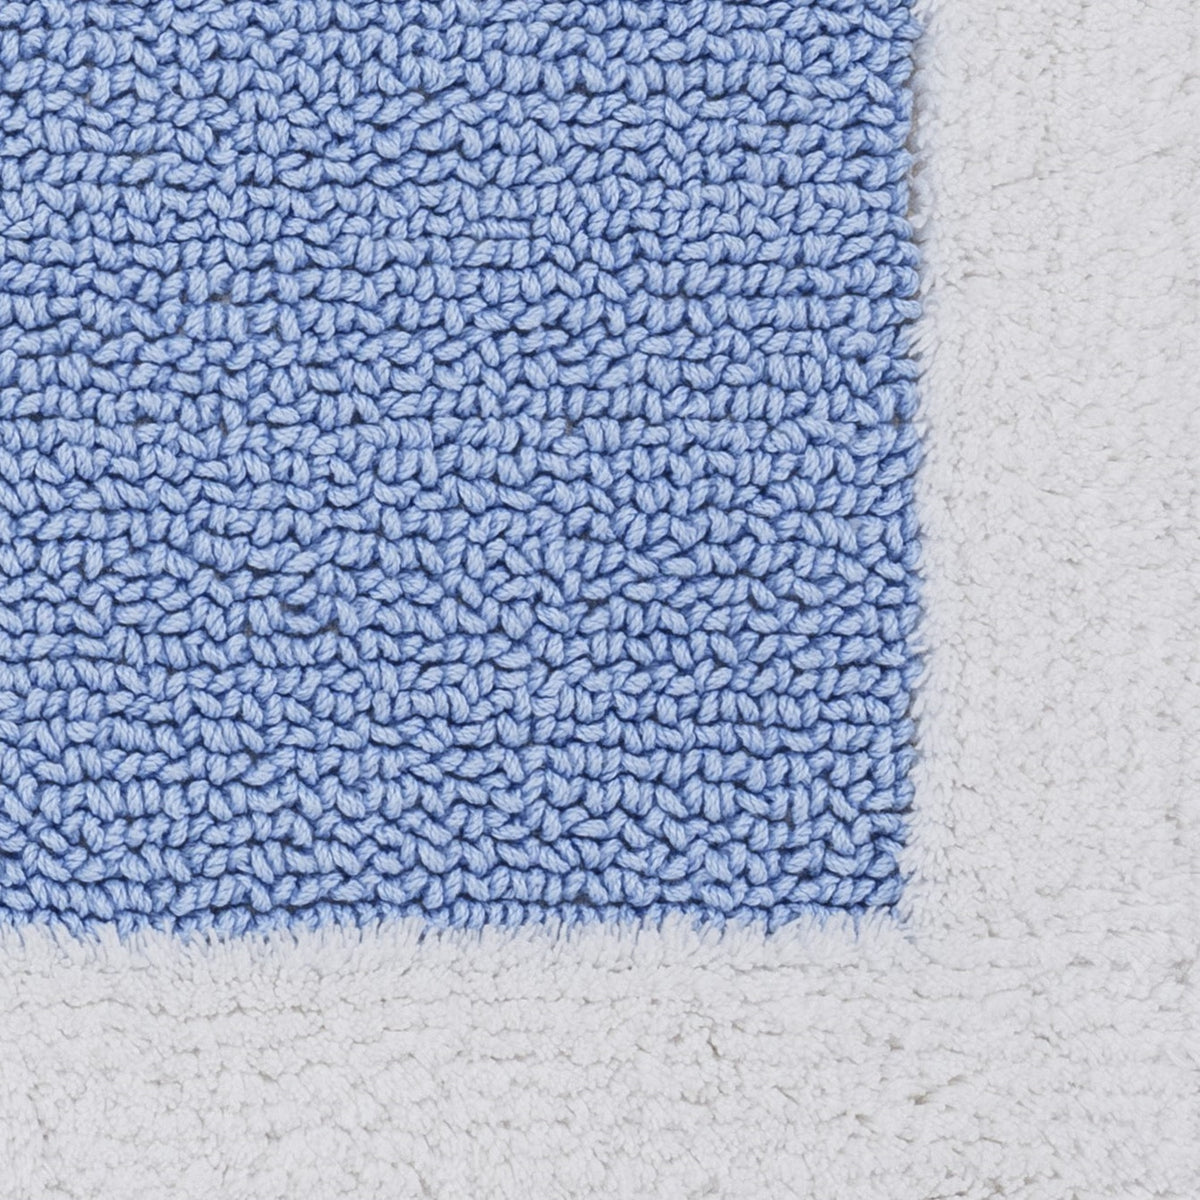 Swatch Sample of Abyss Habidecor Origine Bath Rugs in Color Powder Blue (330)